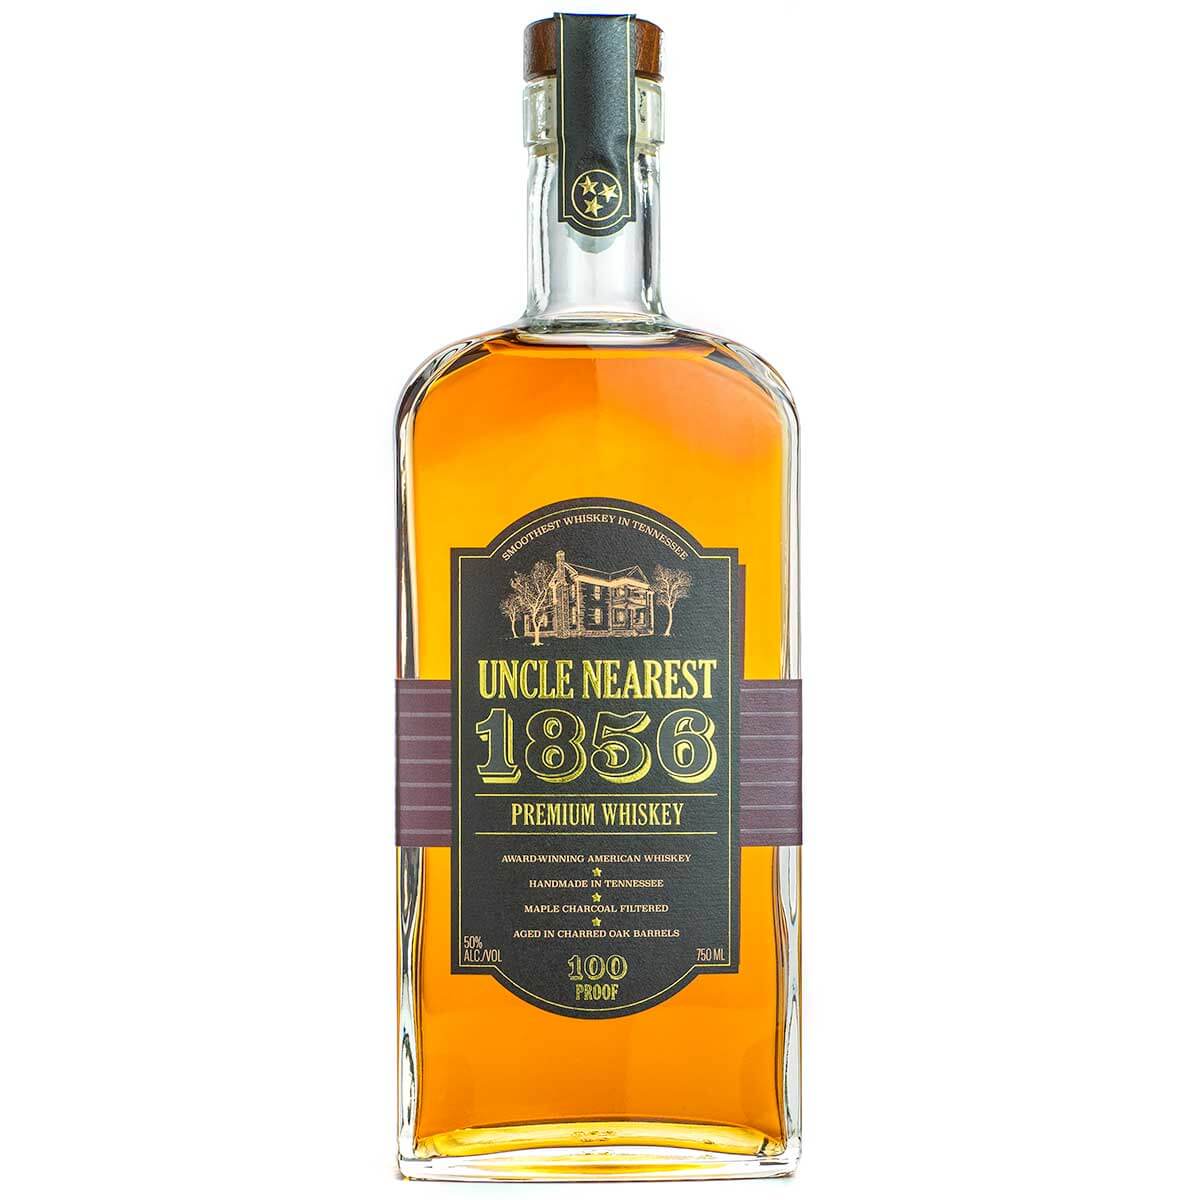 Uncle Nearest 1856 Premium Aged Whiskey bottle